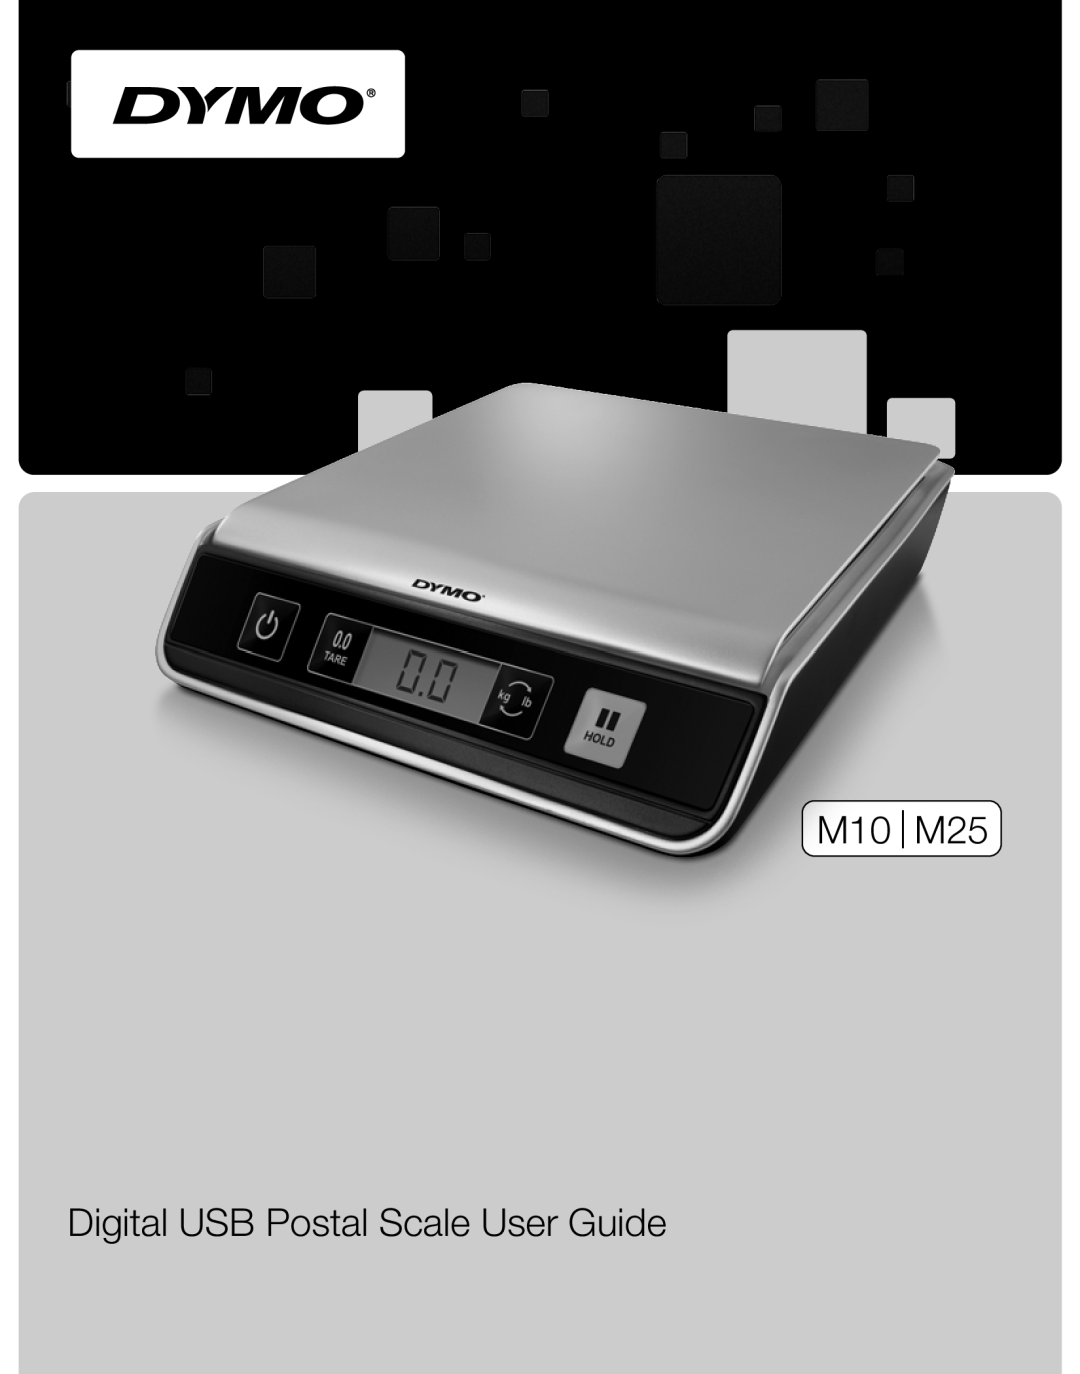 Dymo manual M10 M25, Digital USB Postal Scale User Guide 